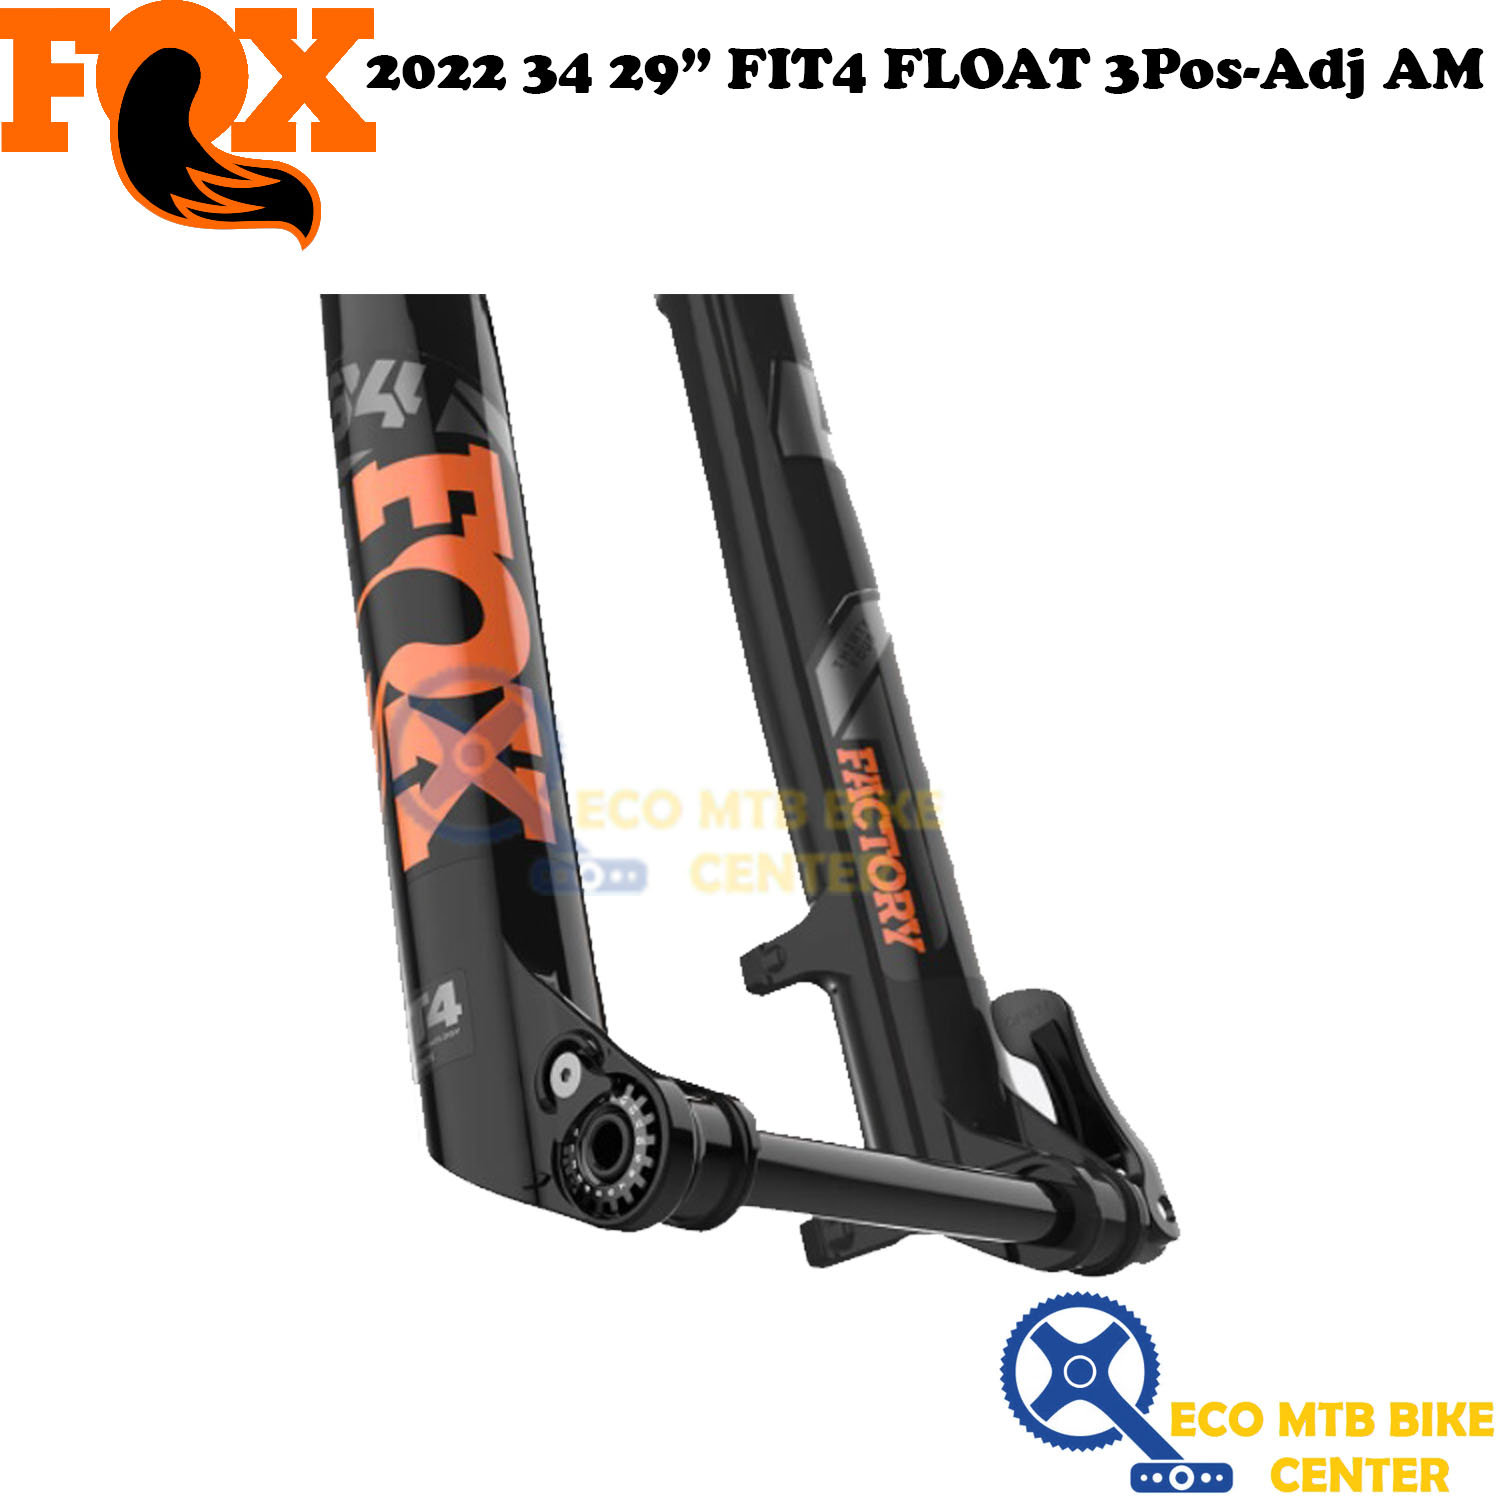 FOX Fork 2022 34 FIT4 FLOAT 3Pos-Adj AM